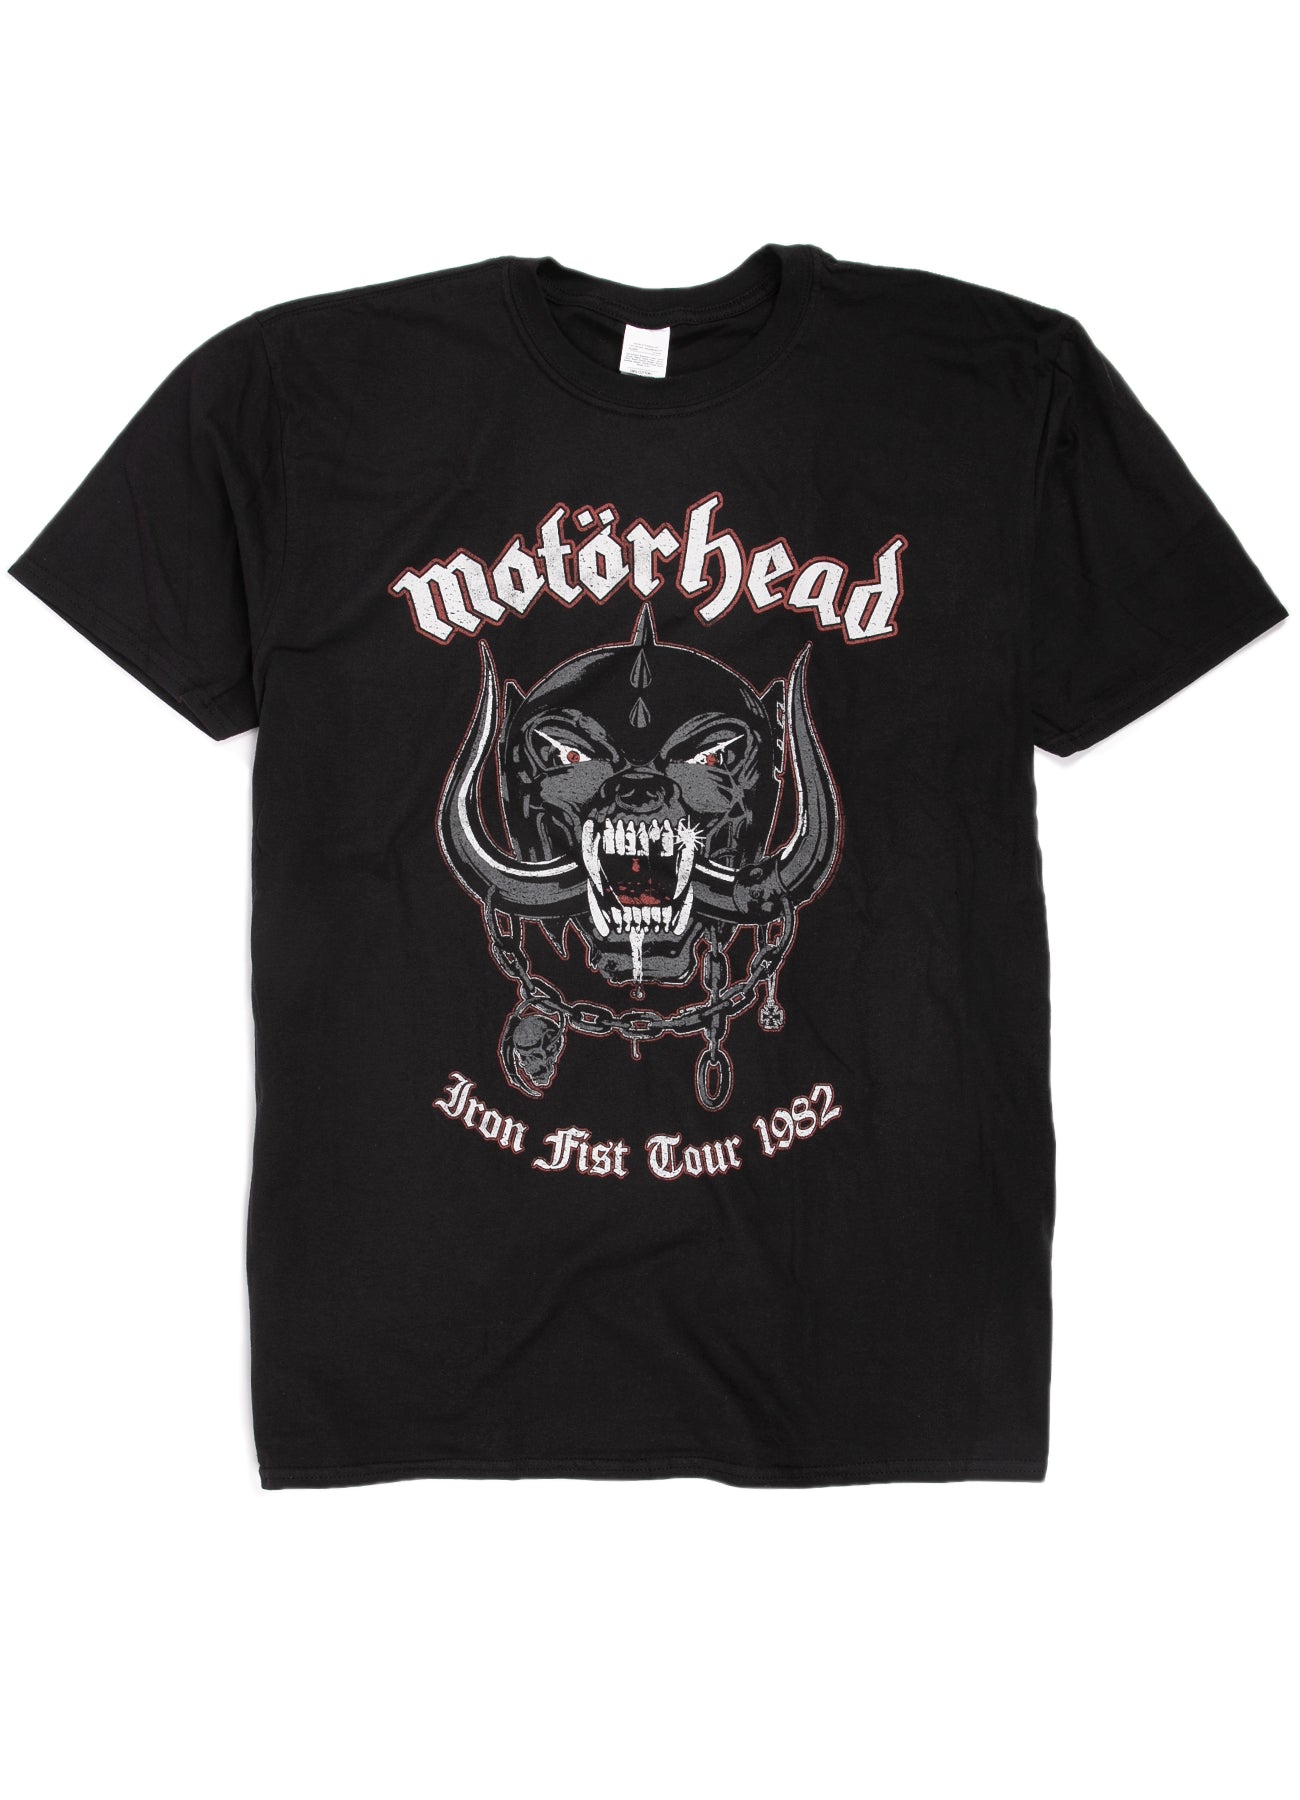 motorhead iron fist tour t shirt